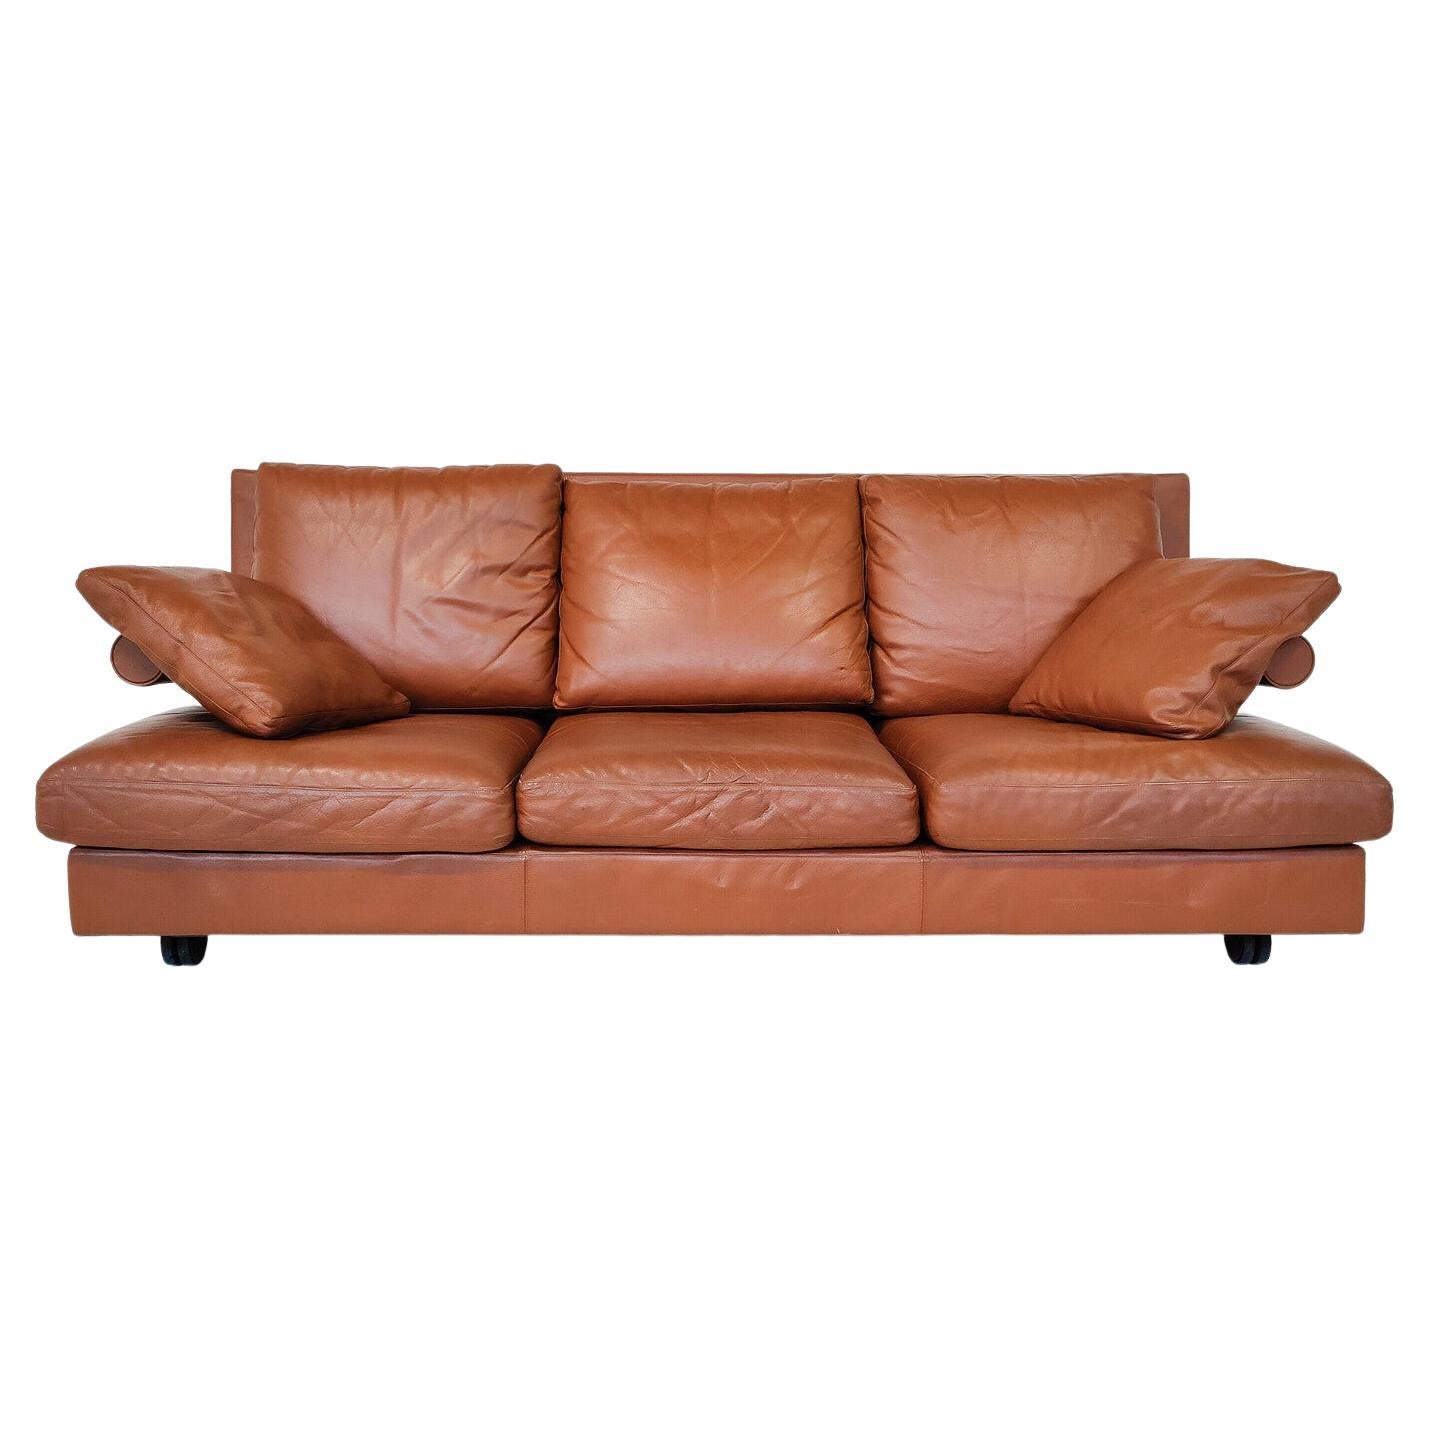 Mid-Century Modern Baisity Sofa by Antonio Citterio for B&B Italia, Cognac Leath For Sale